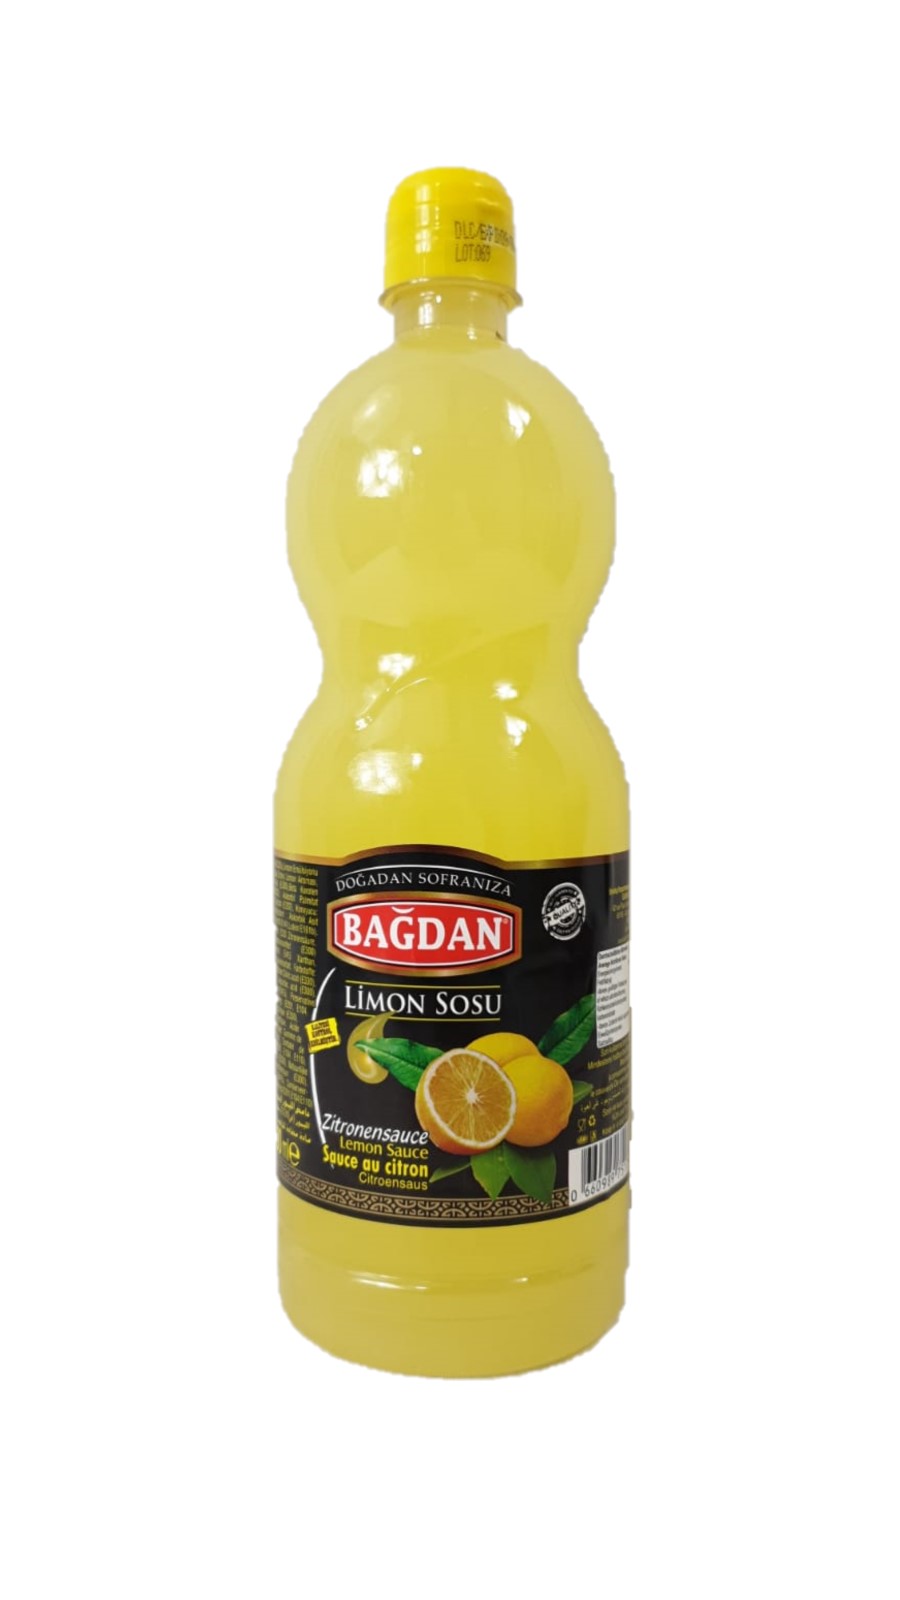 BAGDAN LIMON SOSU 12x1000ML (sauce citron)